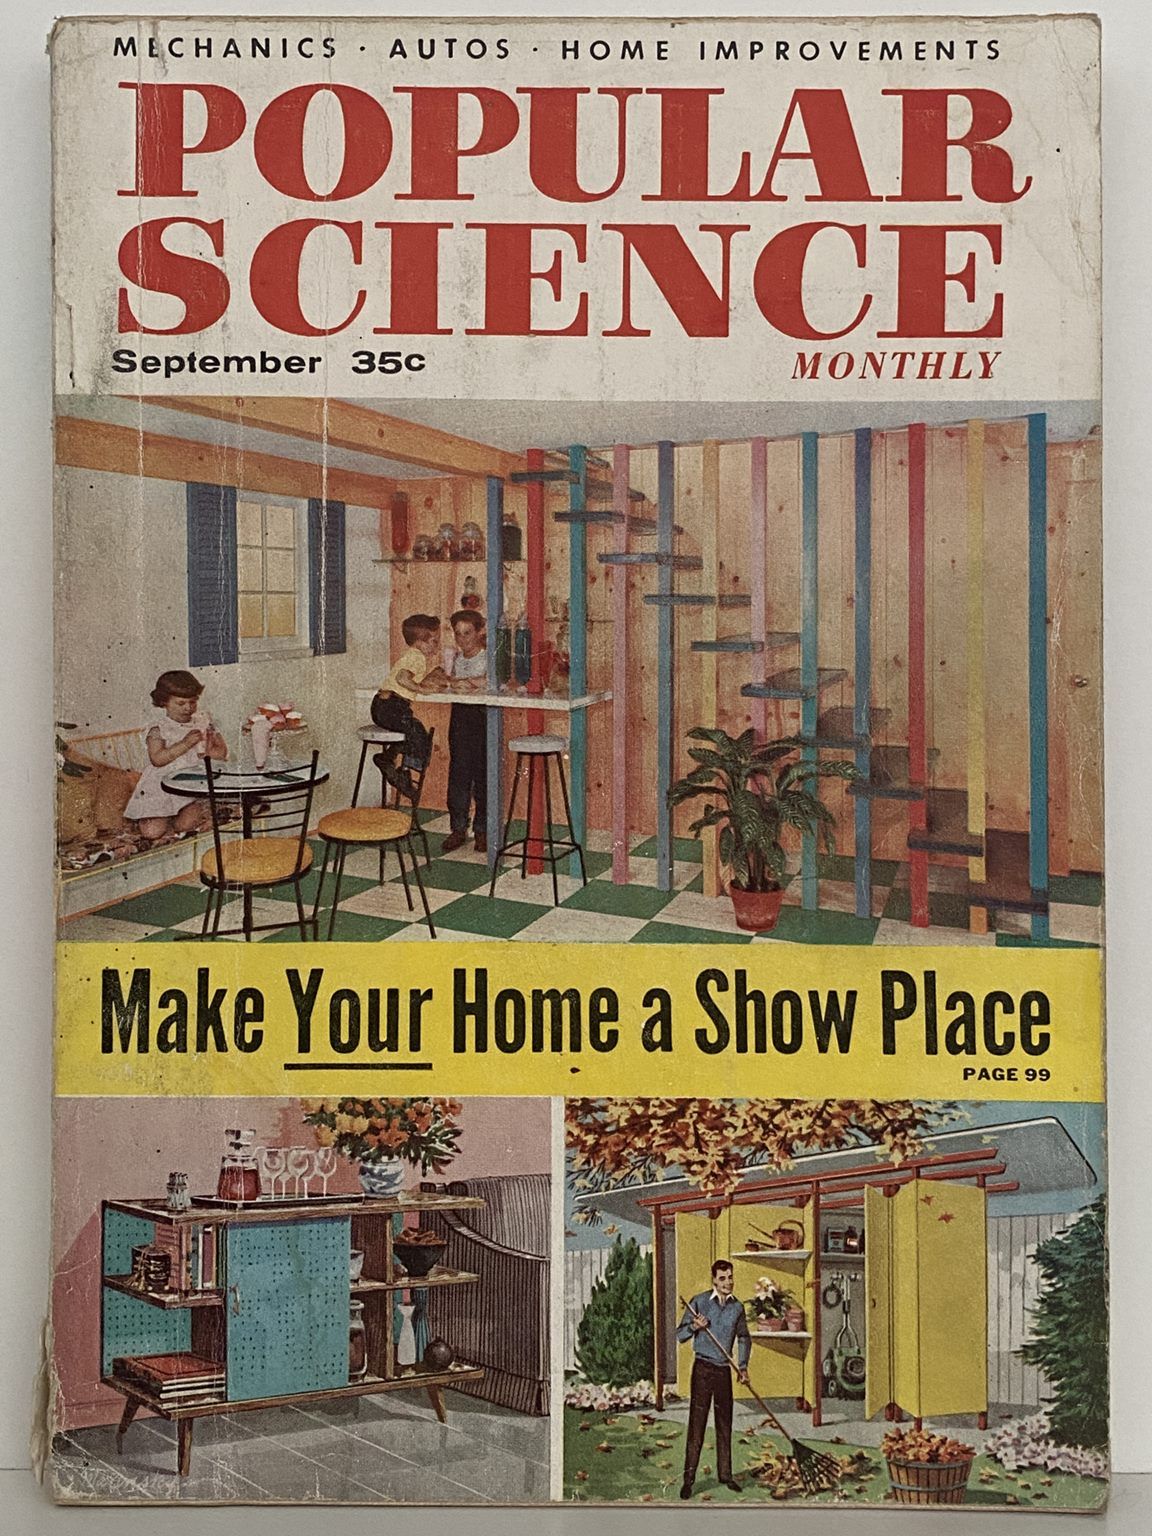 VINTAGE MAGAZINE: Popular Science, Vol. 169, No. 3 - September 1956